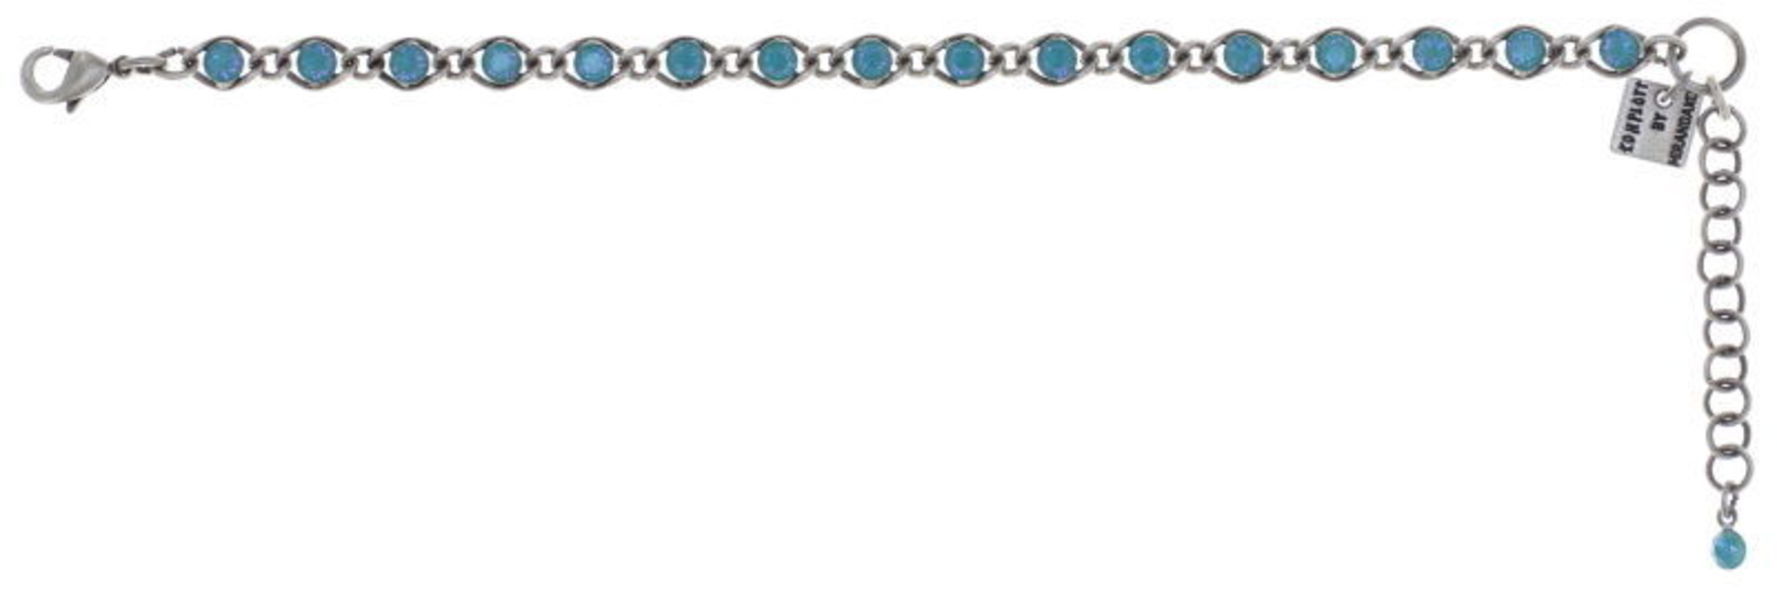 Konplott Bracelet -  Magic Fireball - blue (0040)